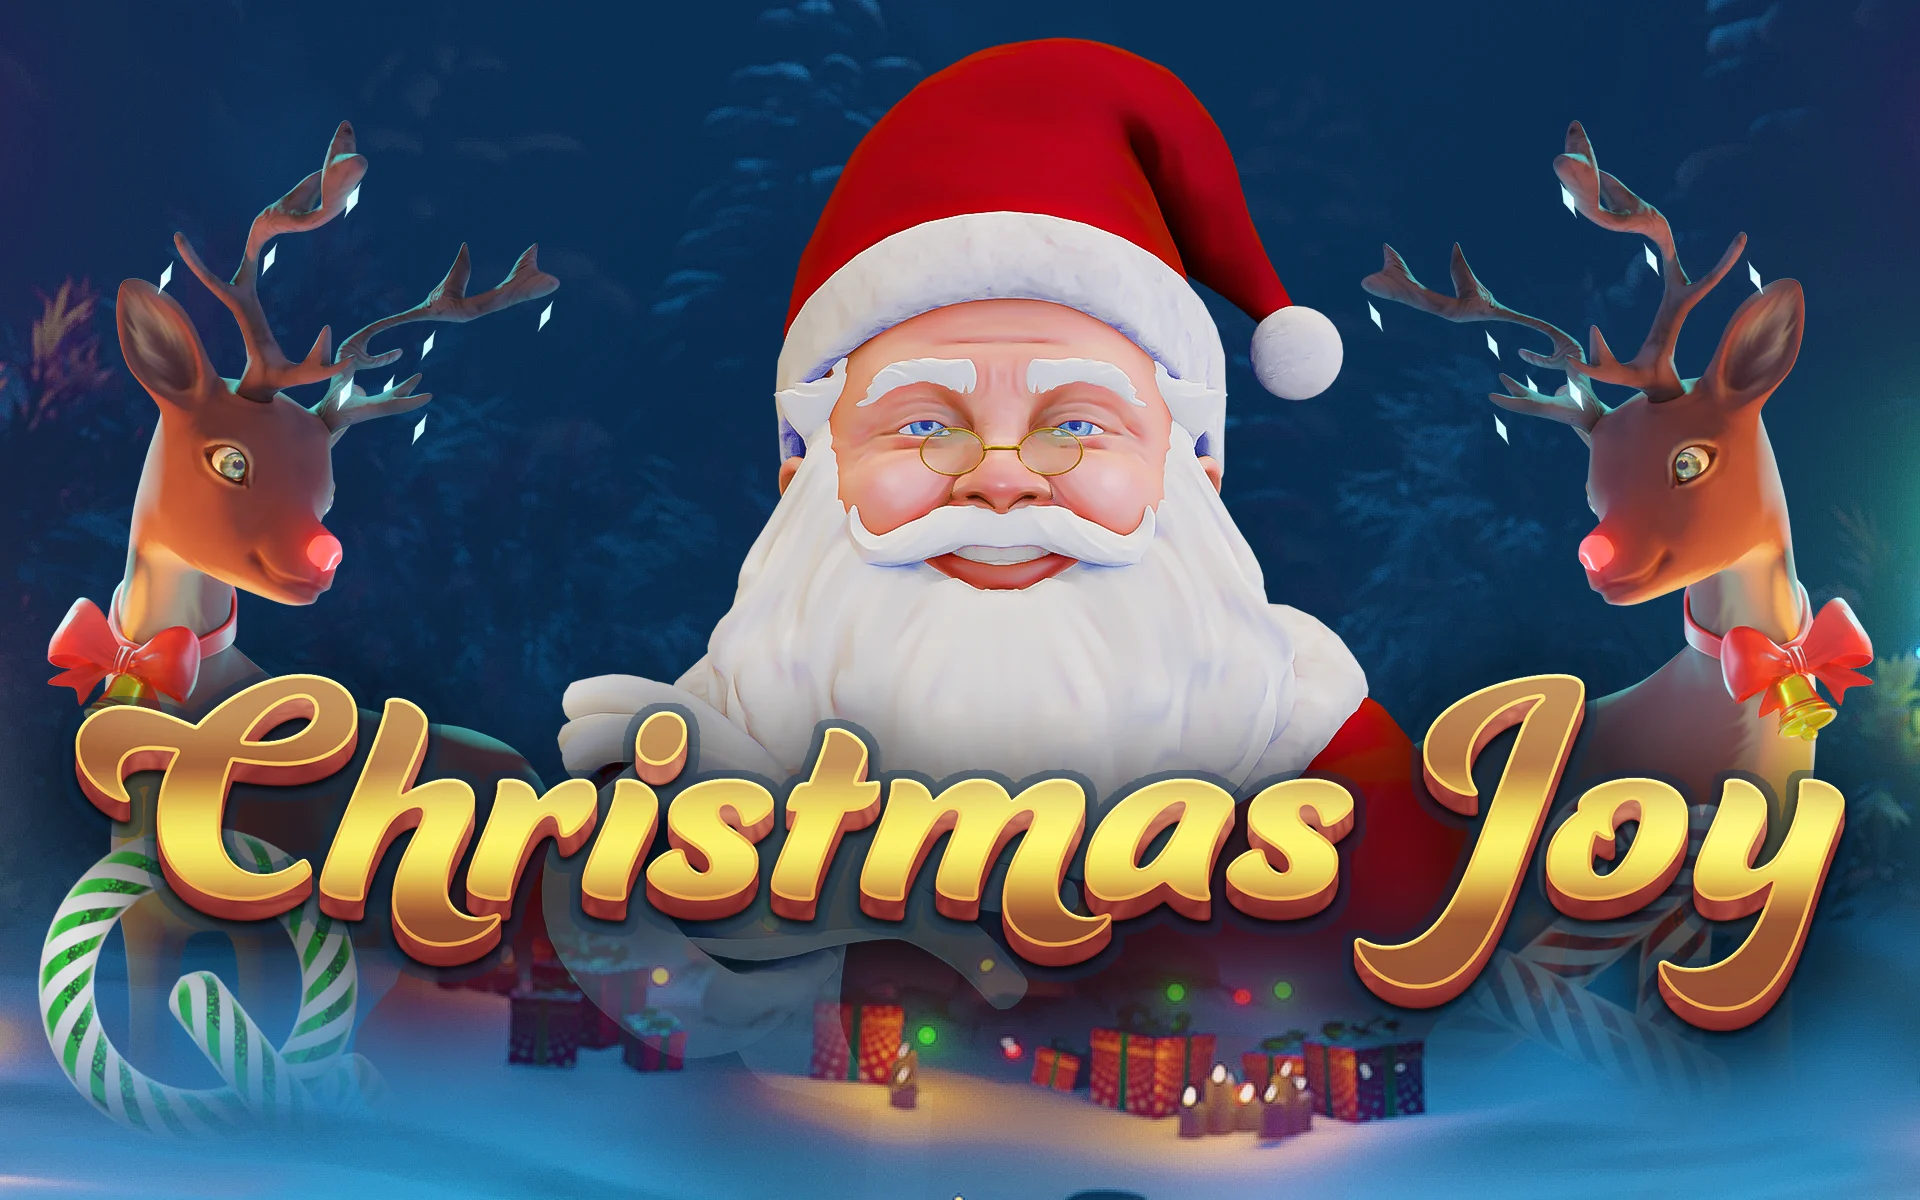 Play Christmas Joy on Starcasino.be online casino